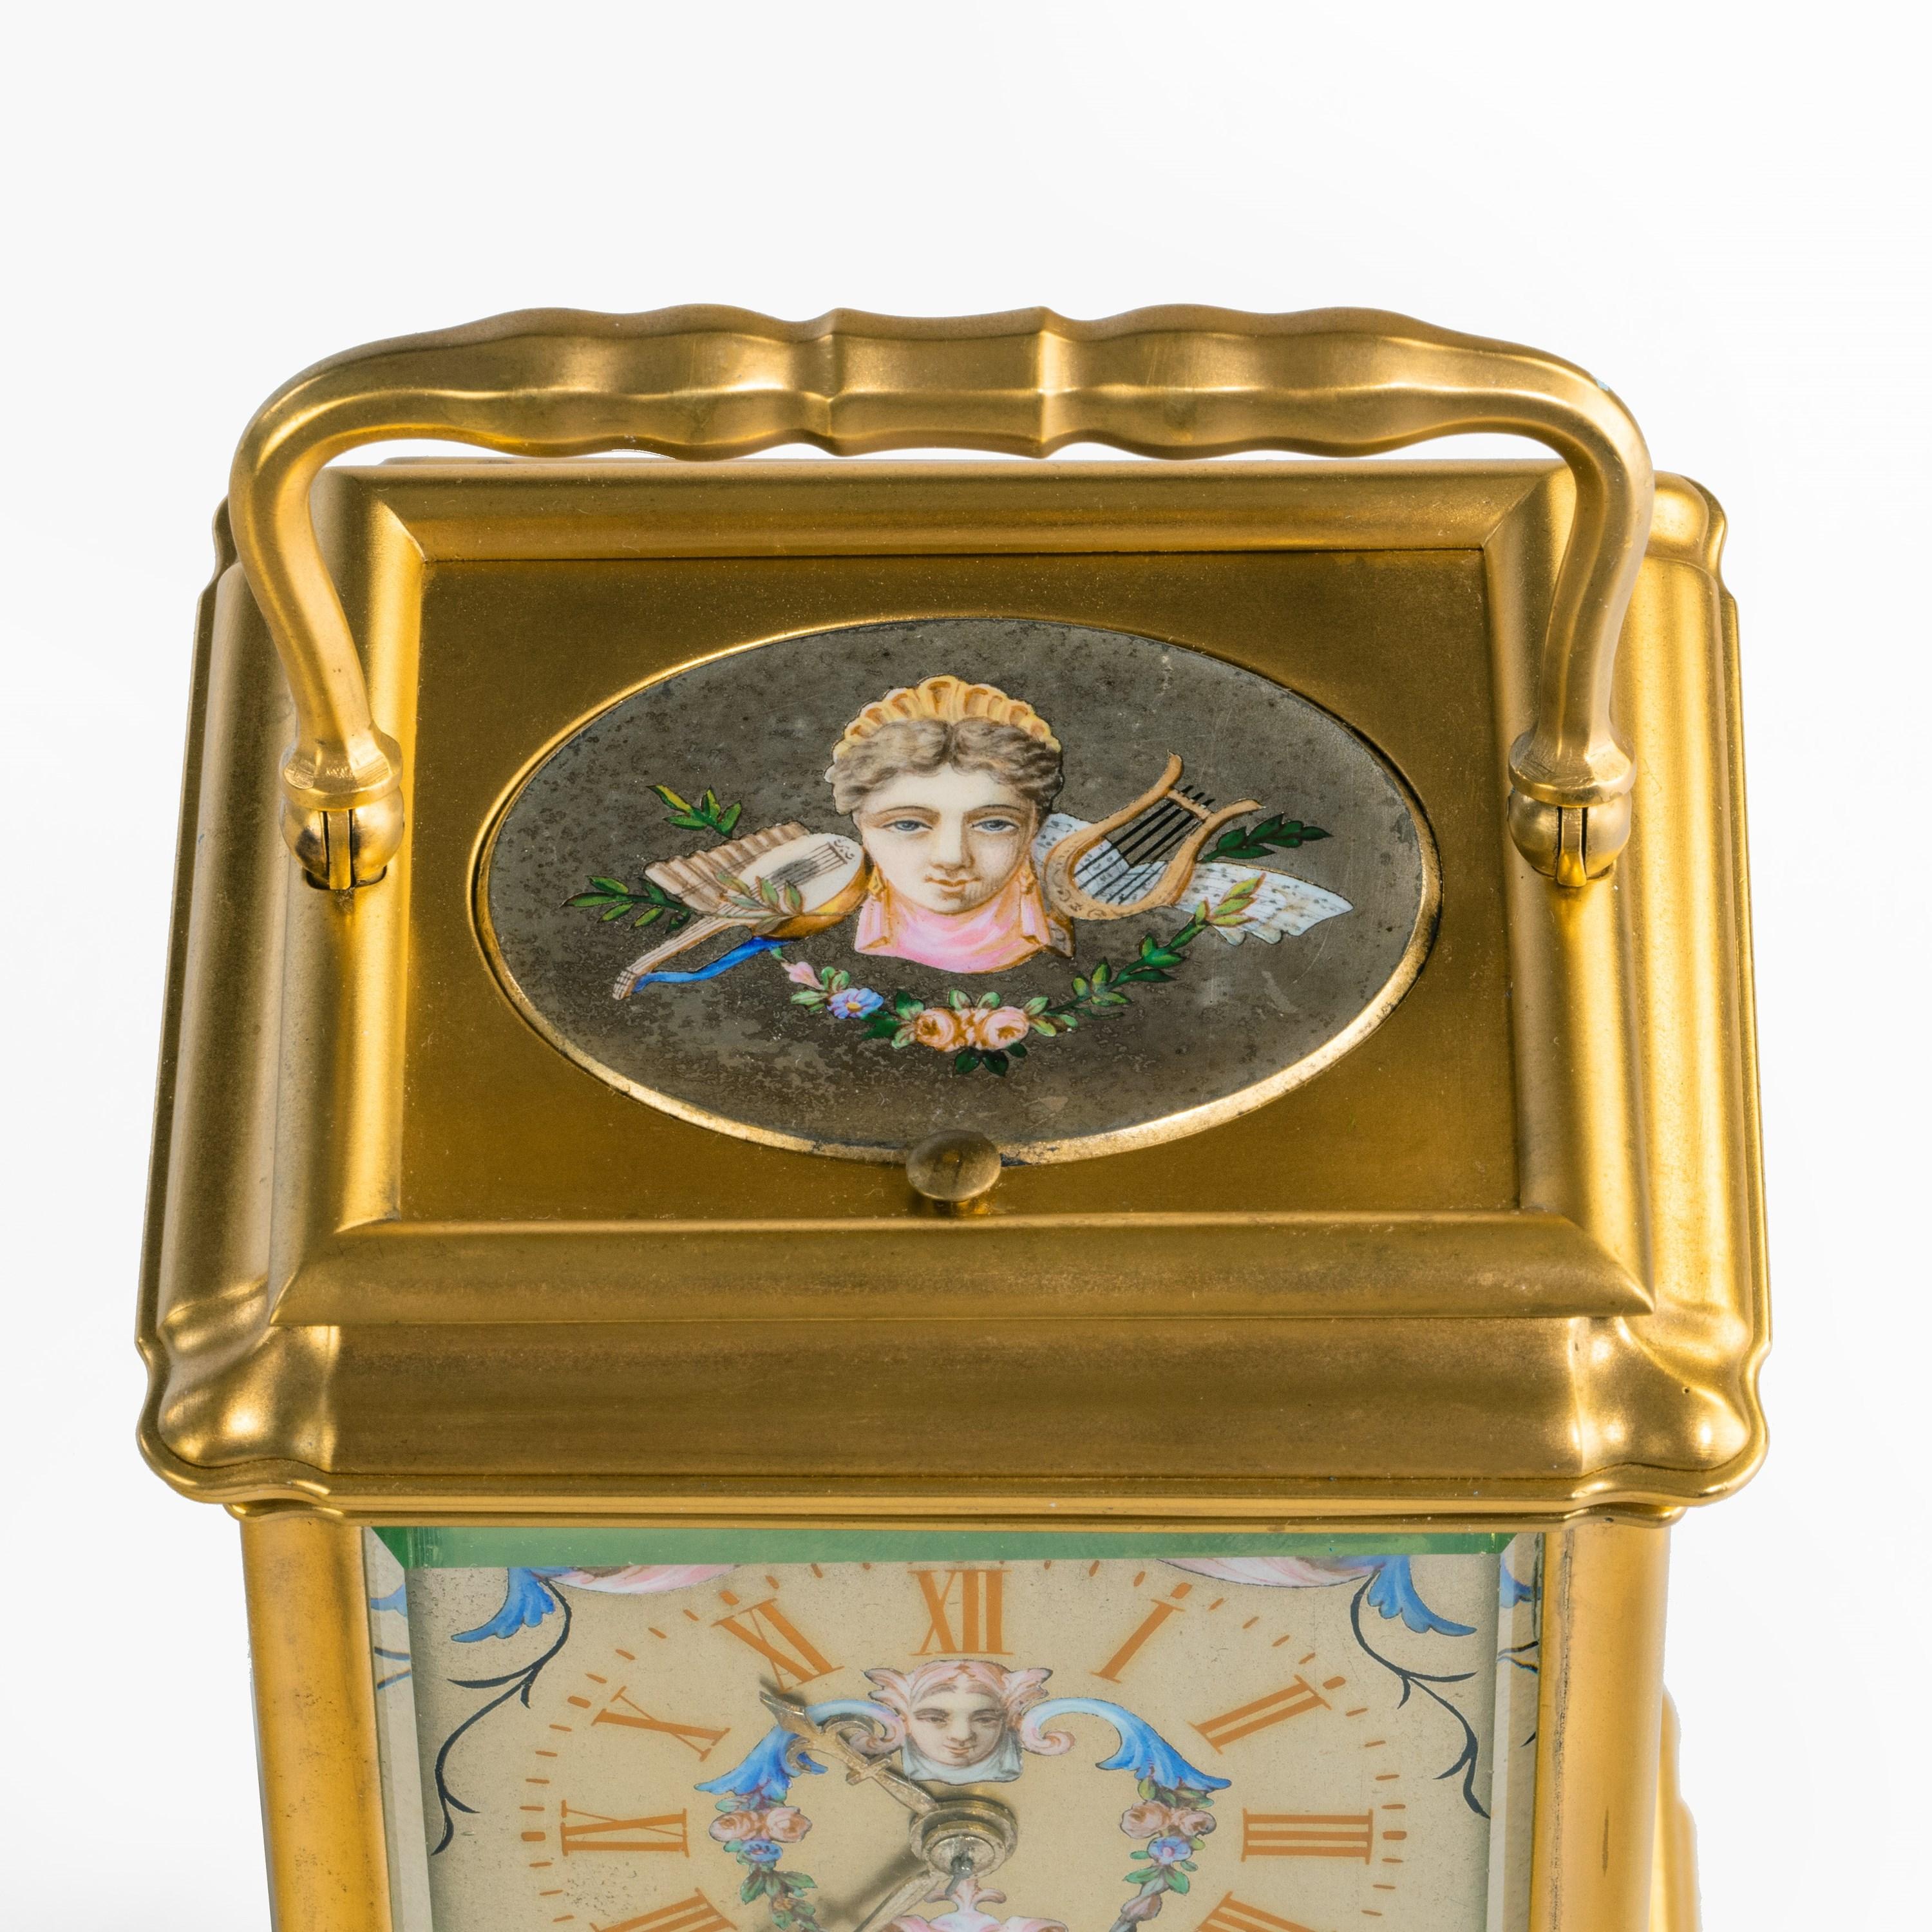 antique carriage clocks